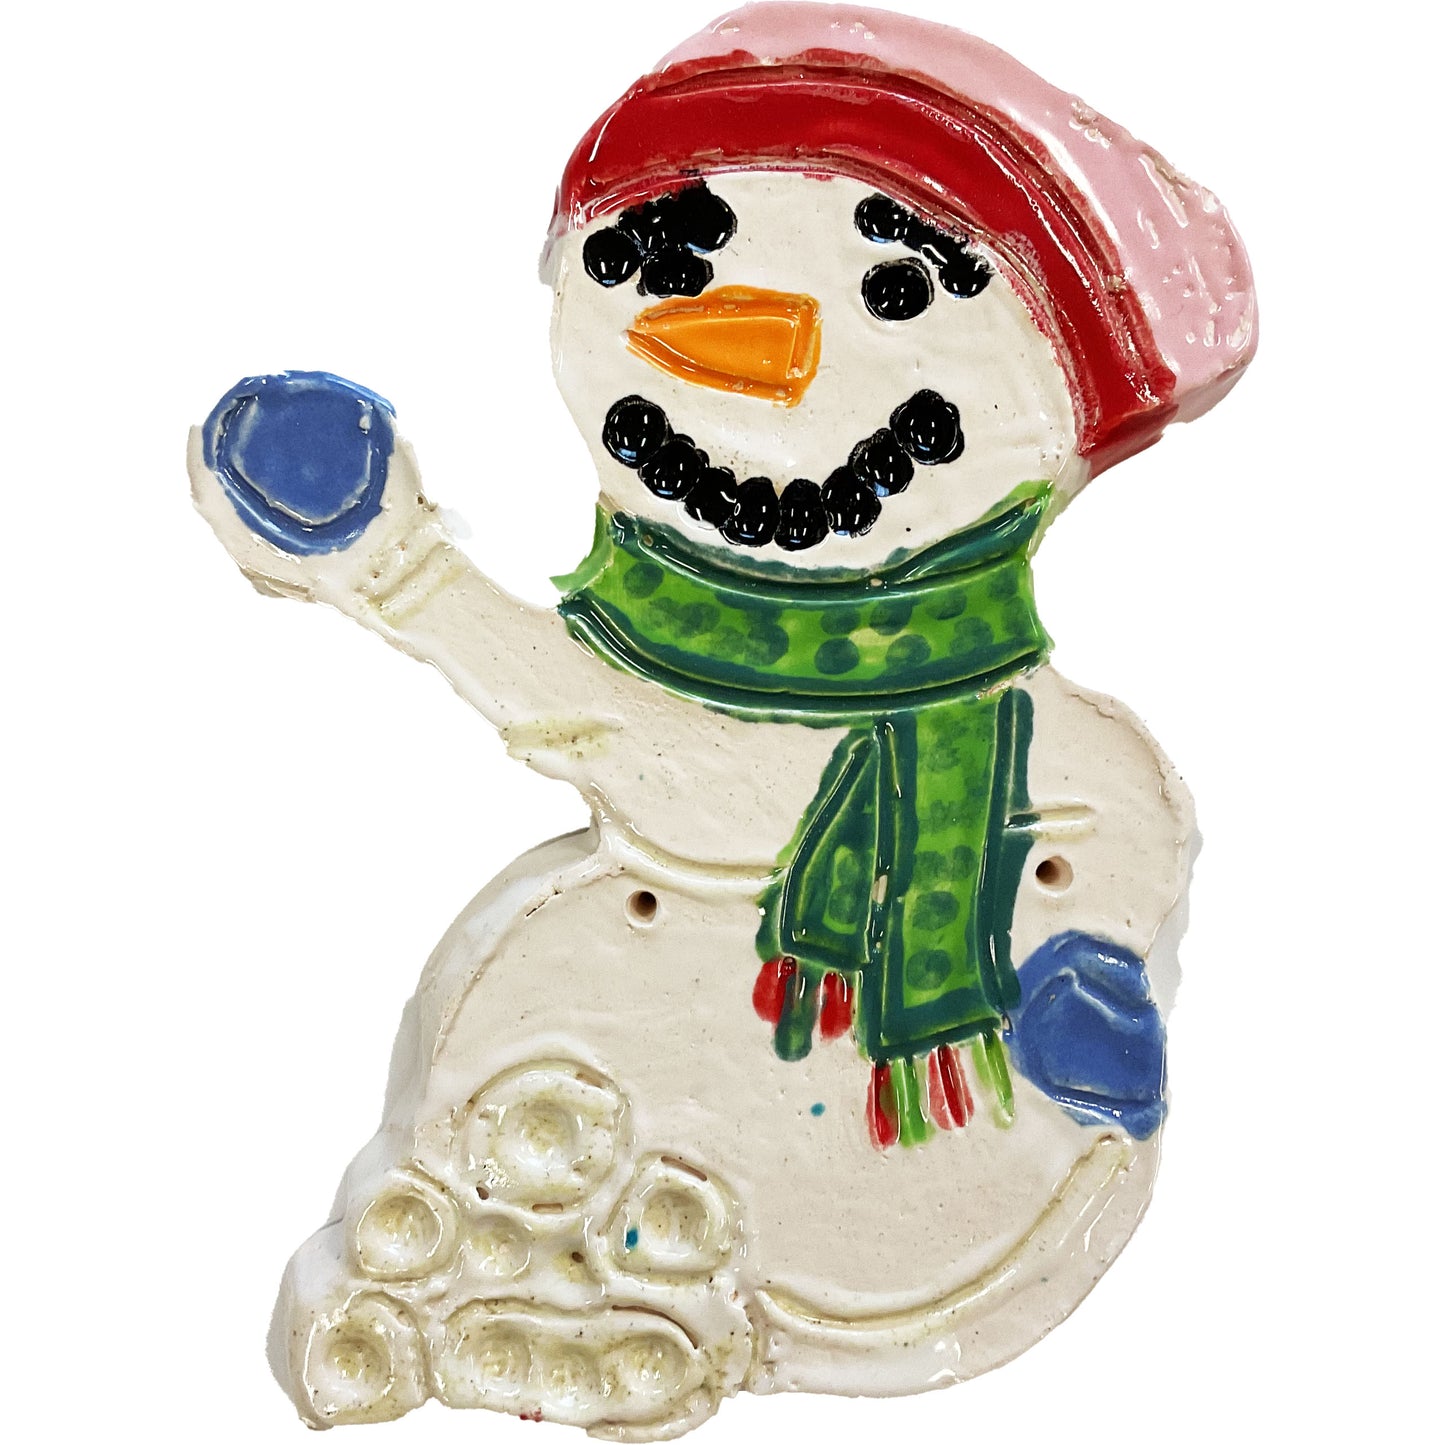 Ceramic Arts Handmade Clay Crafts 6.5-inch x 5-inch Glazed Christmas Snowman by Morgan Fox